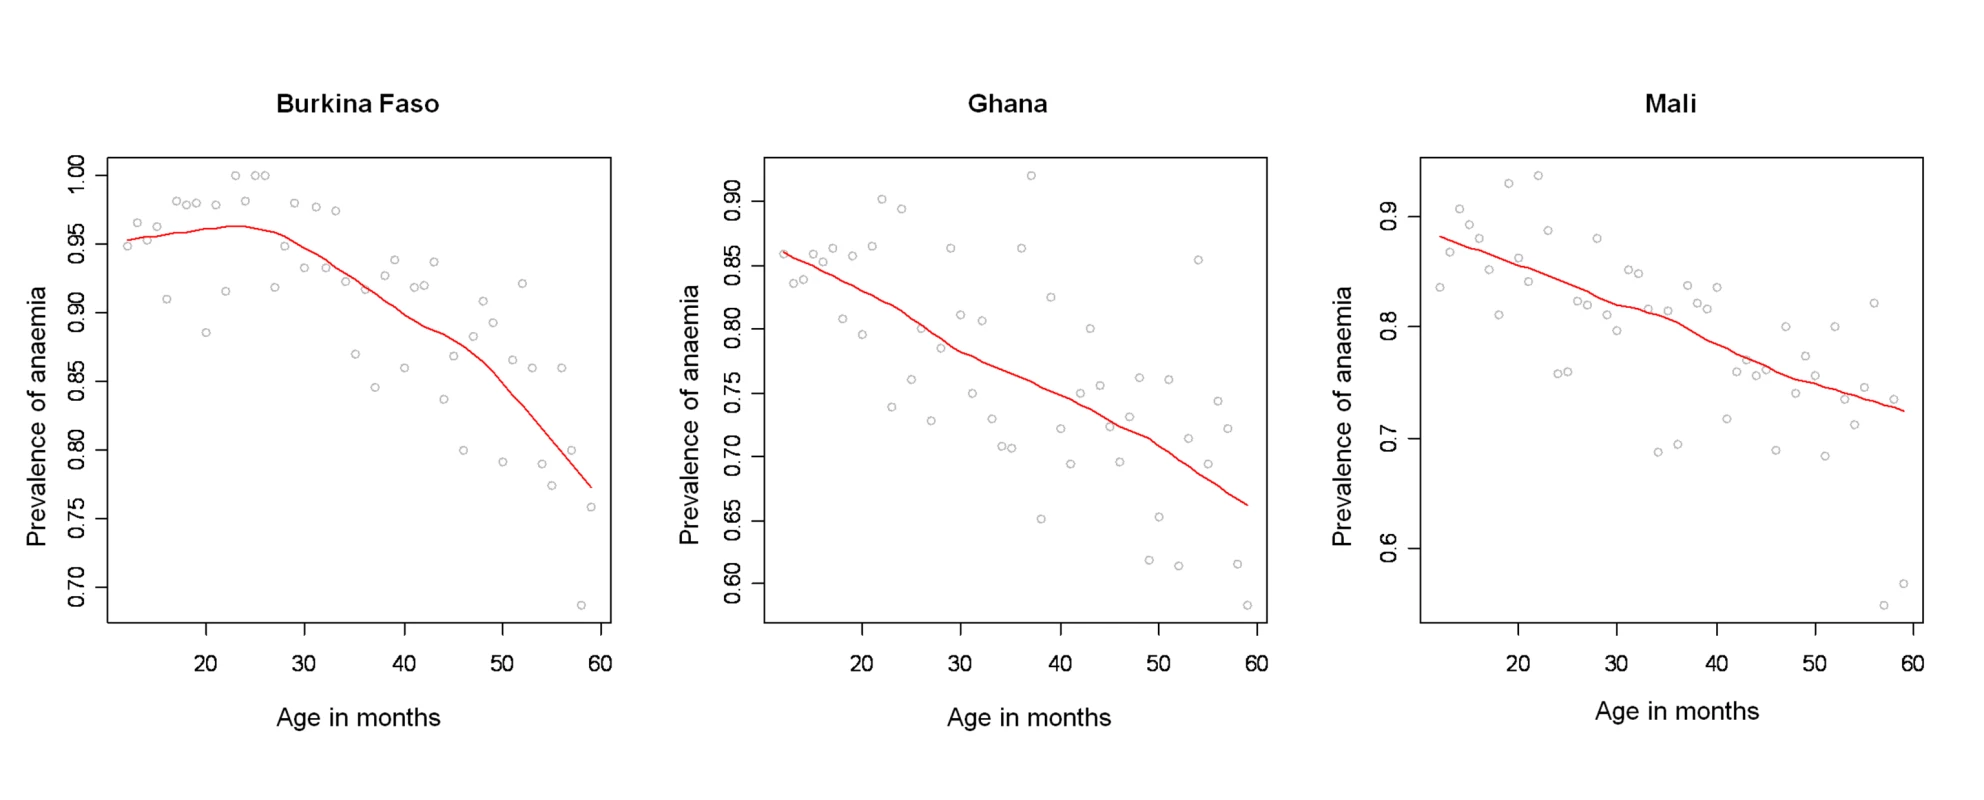 Profile of anaemia by age in Burkina Faso, Ghana, and Mali.